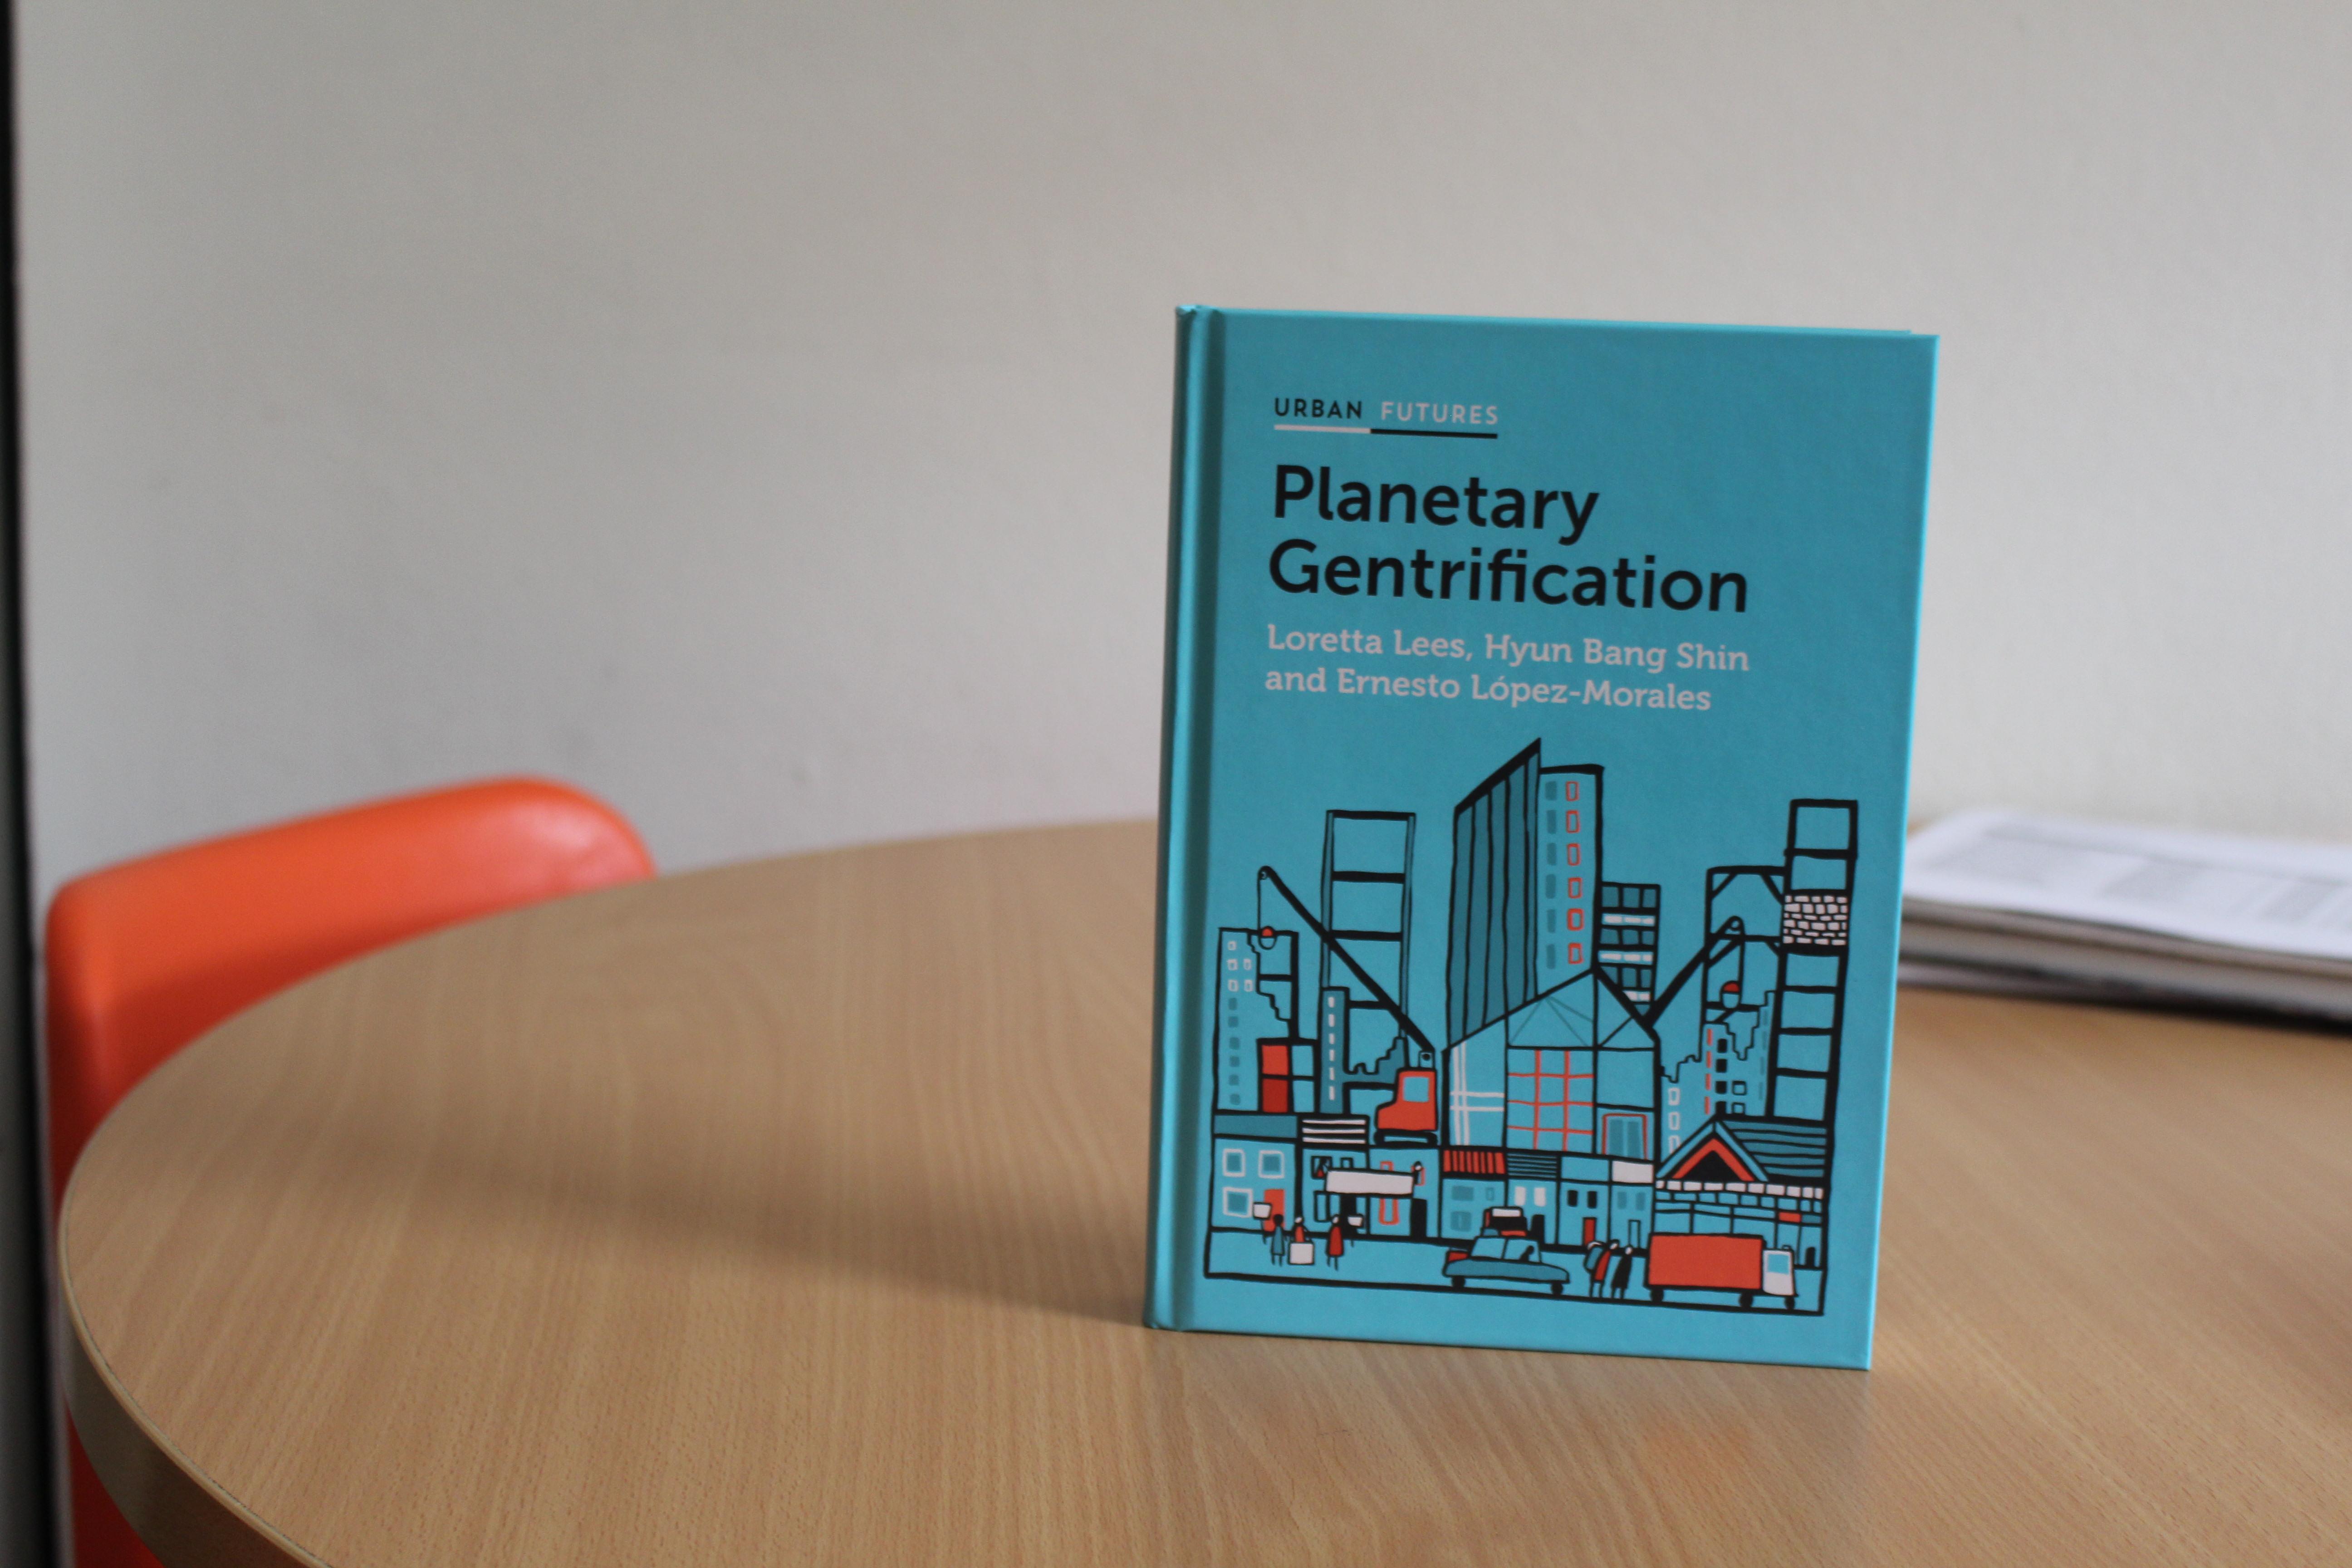 Libro "Planetary Gentrification".